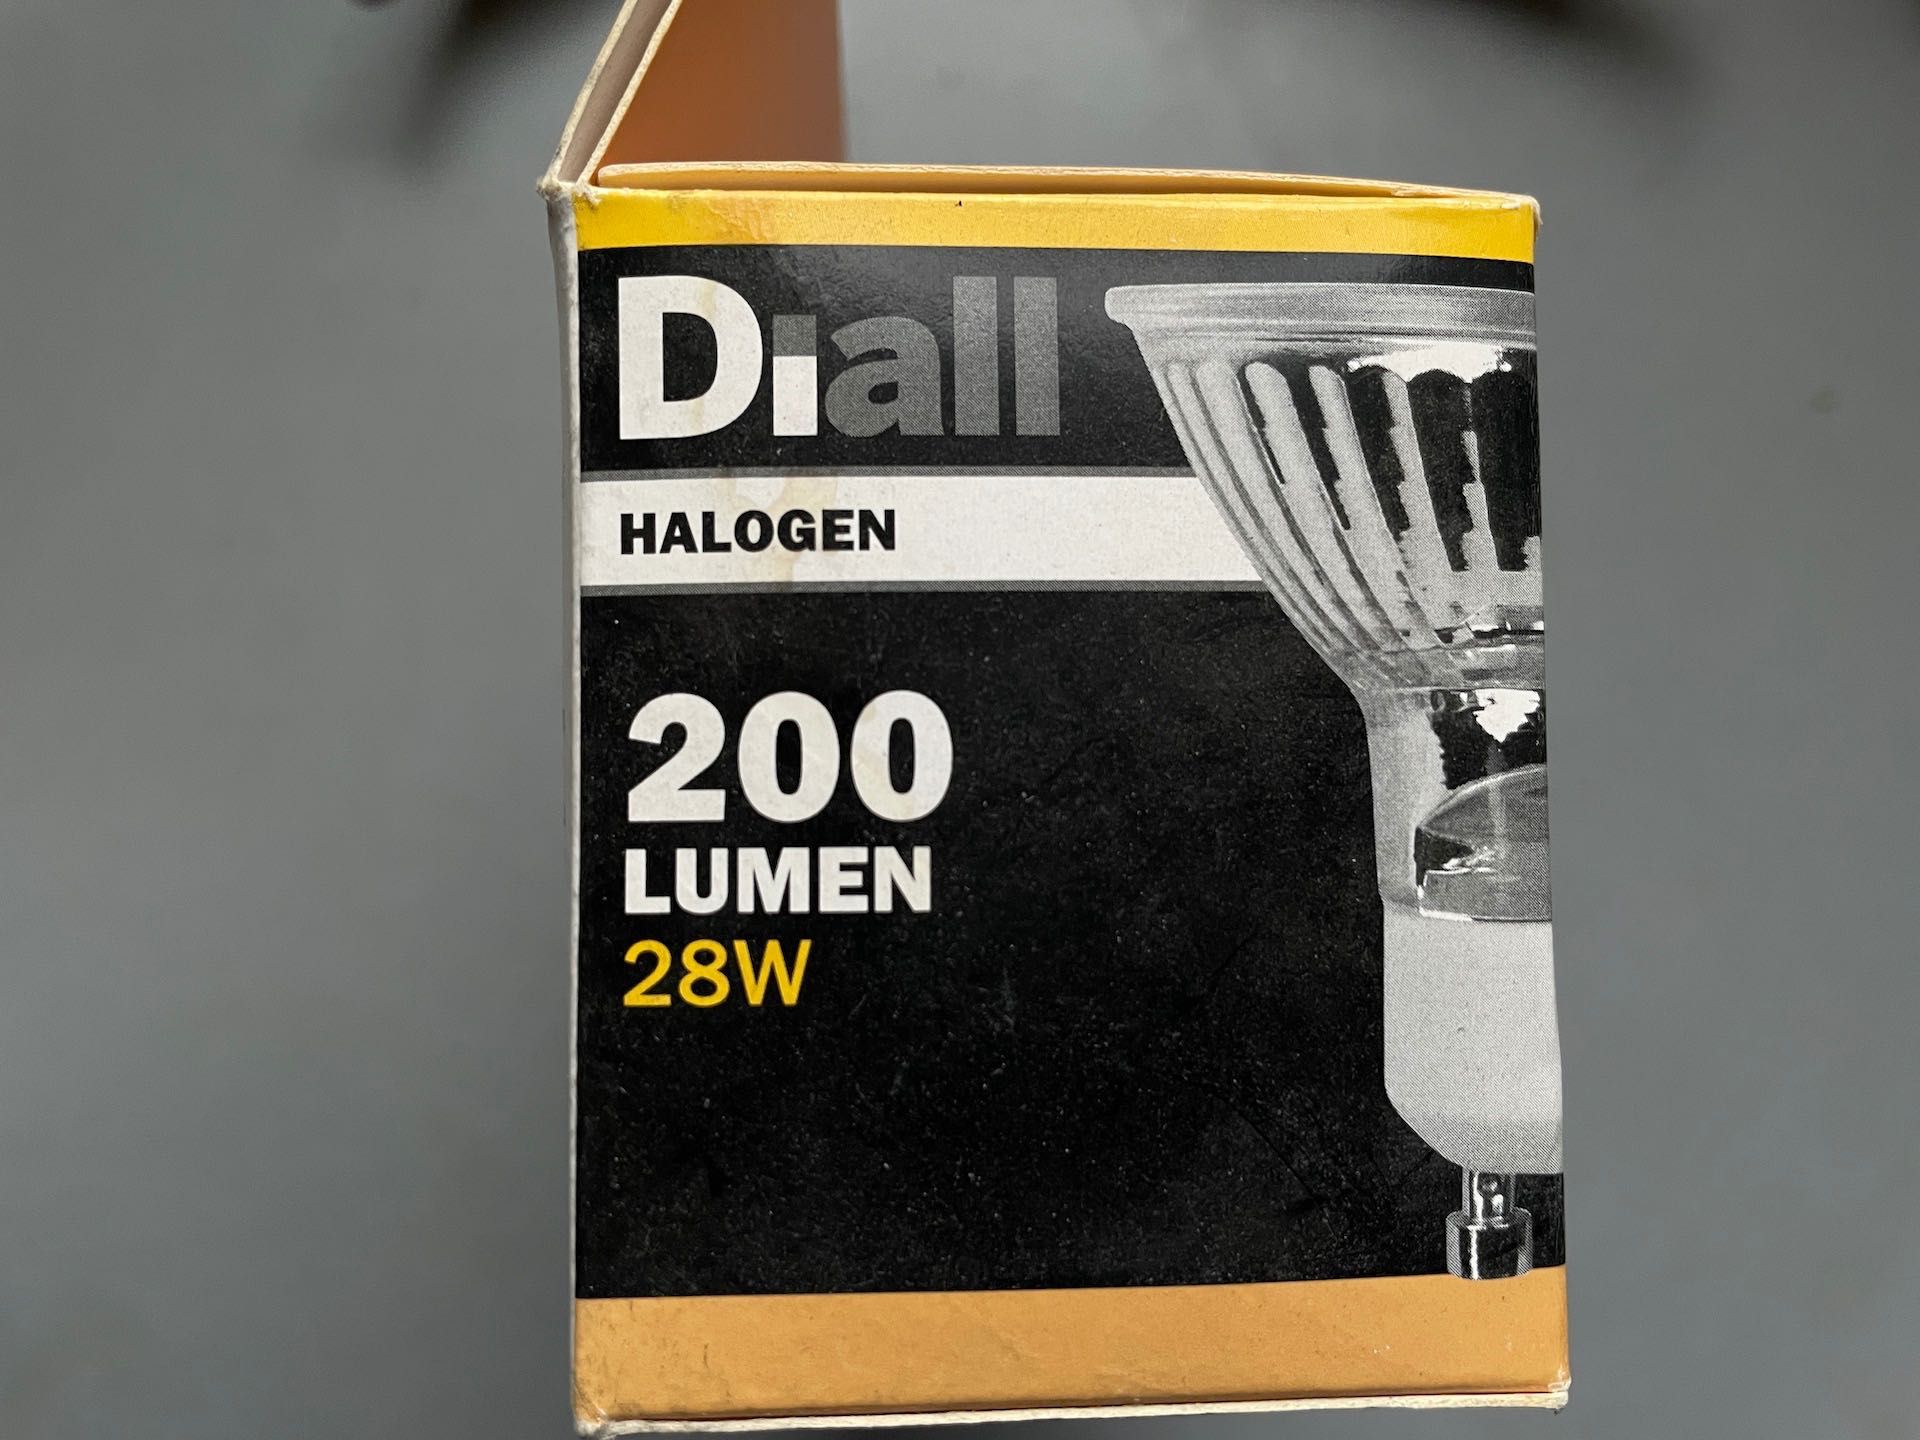 Żarówka GU10 Diall halogen 28W 200 lumen 1 sztuka